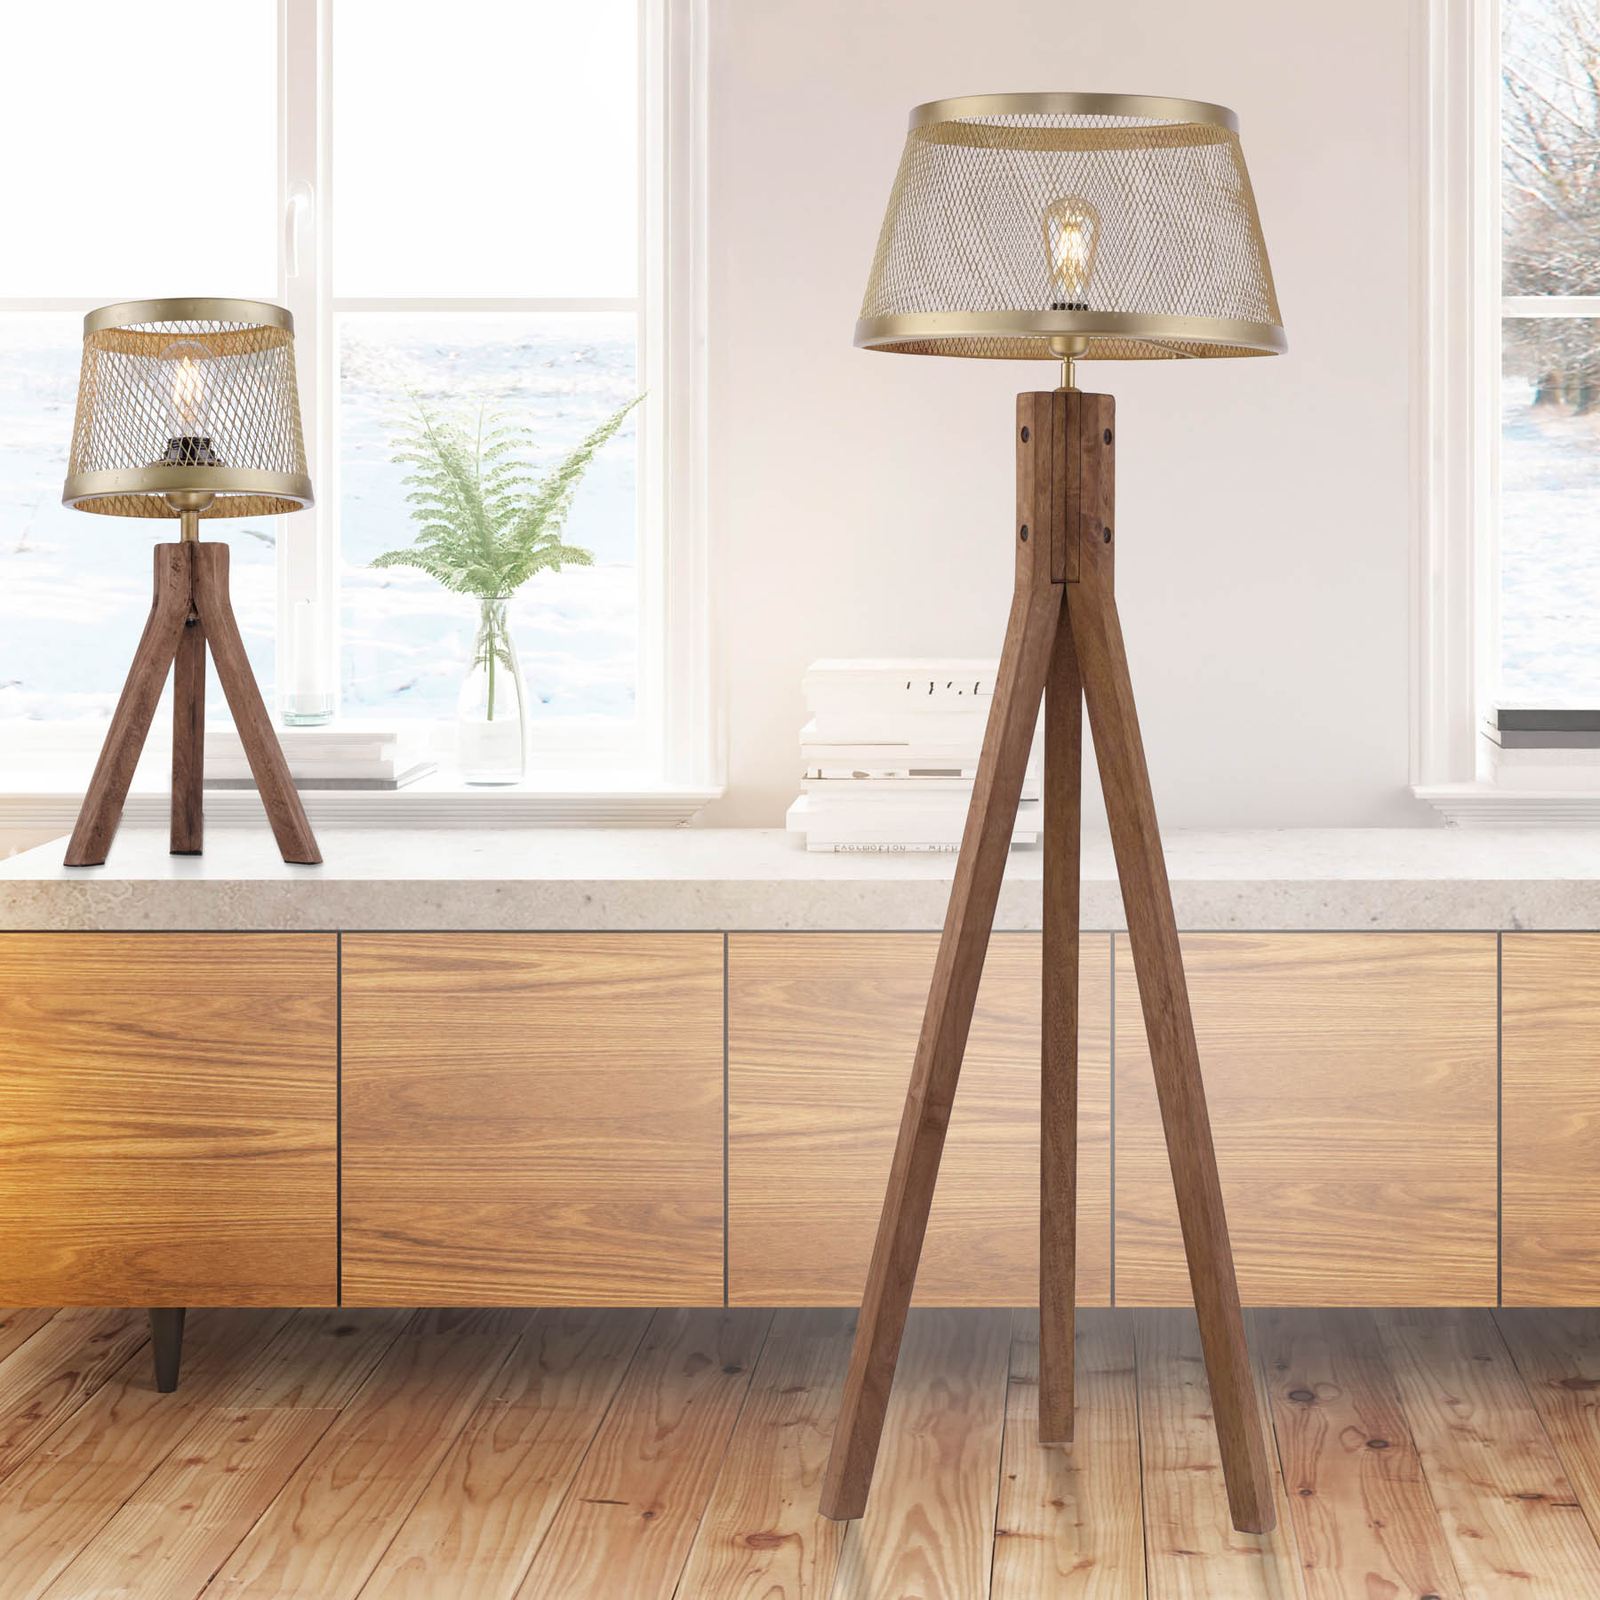 Frederik wooden floor lamp, tripod